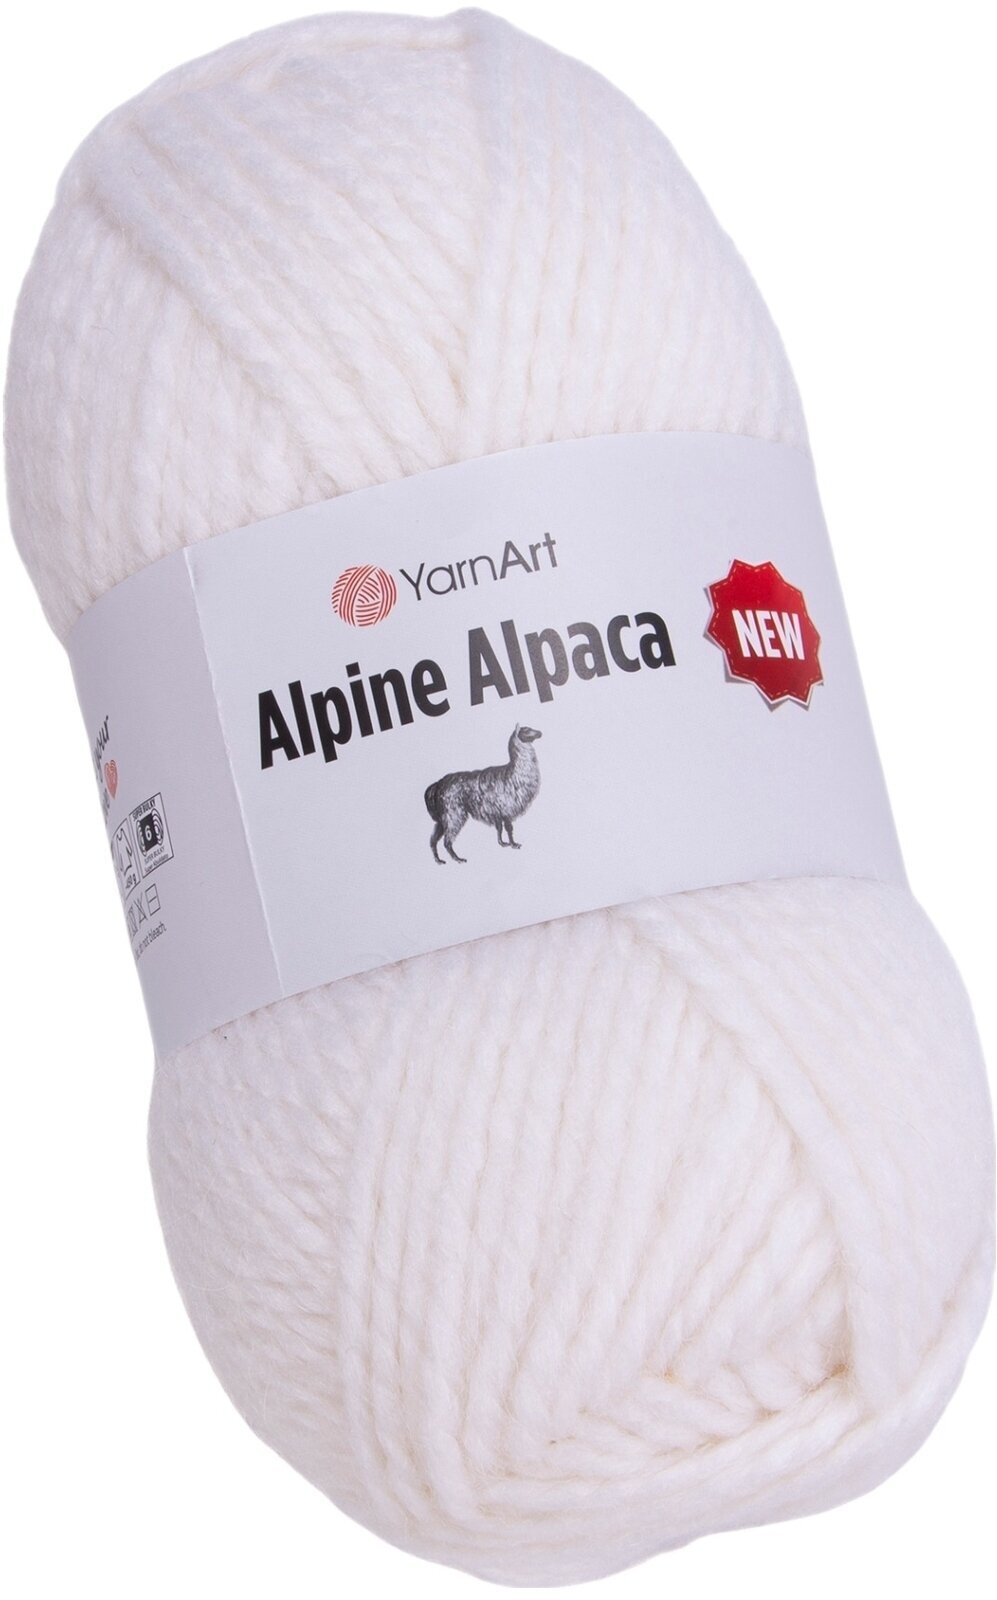 Strickgarn Yarn Art Alpine Alpaca Strickgarn 1440